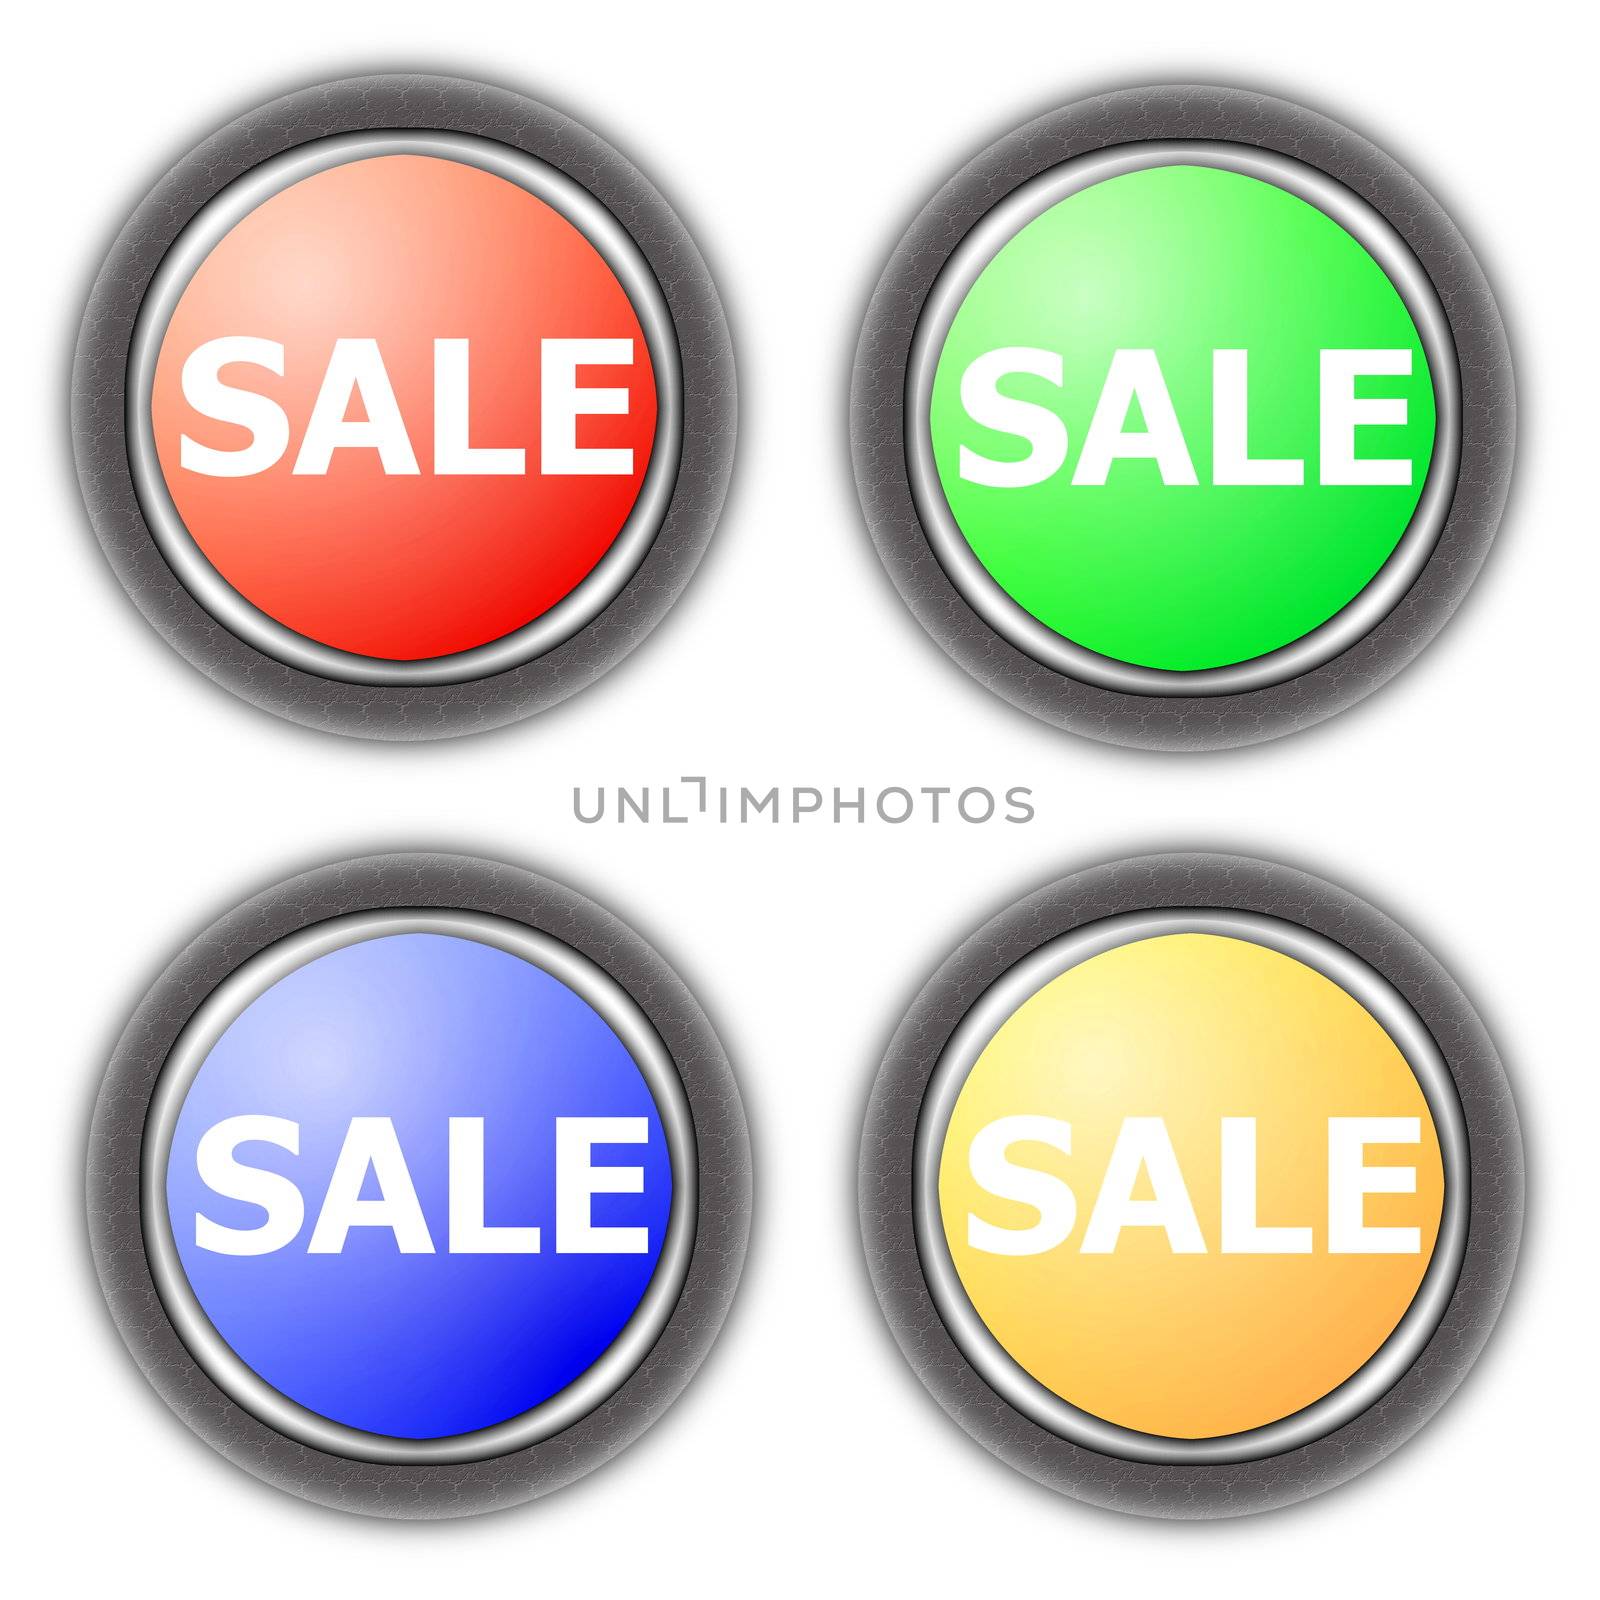 sale button collection for internet shop website